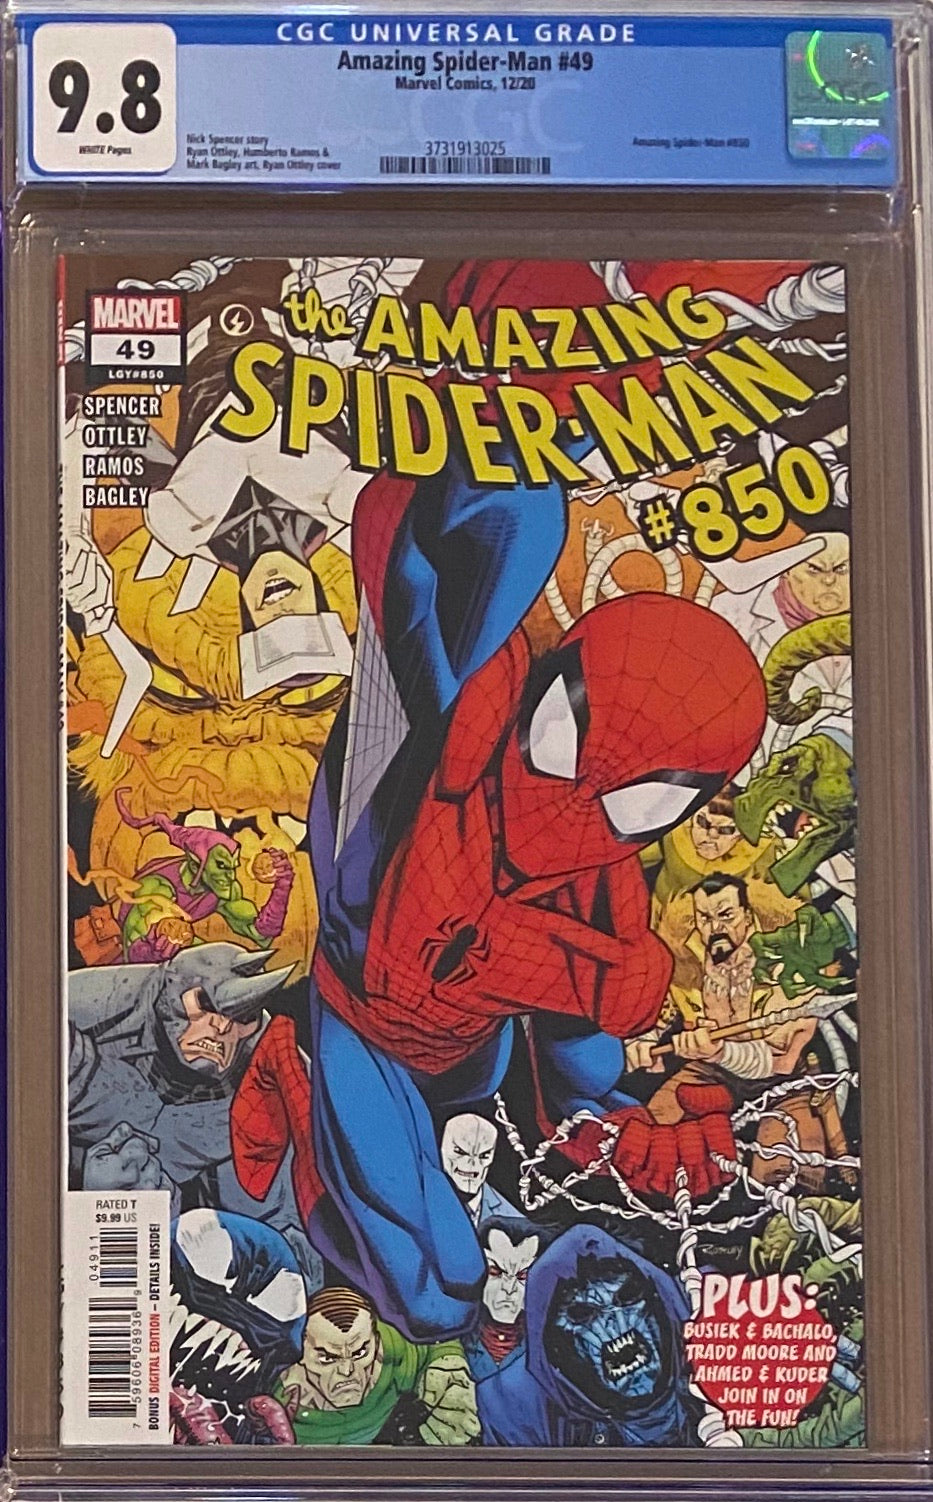 Amazing Spider-Man #850 (#49) CGC 9.8